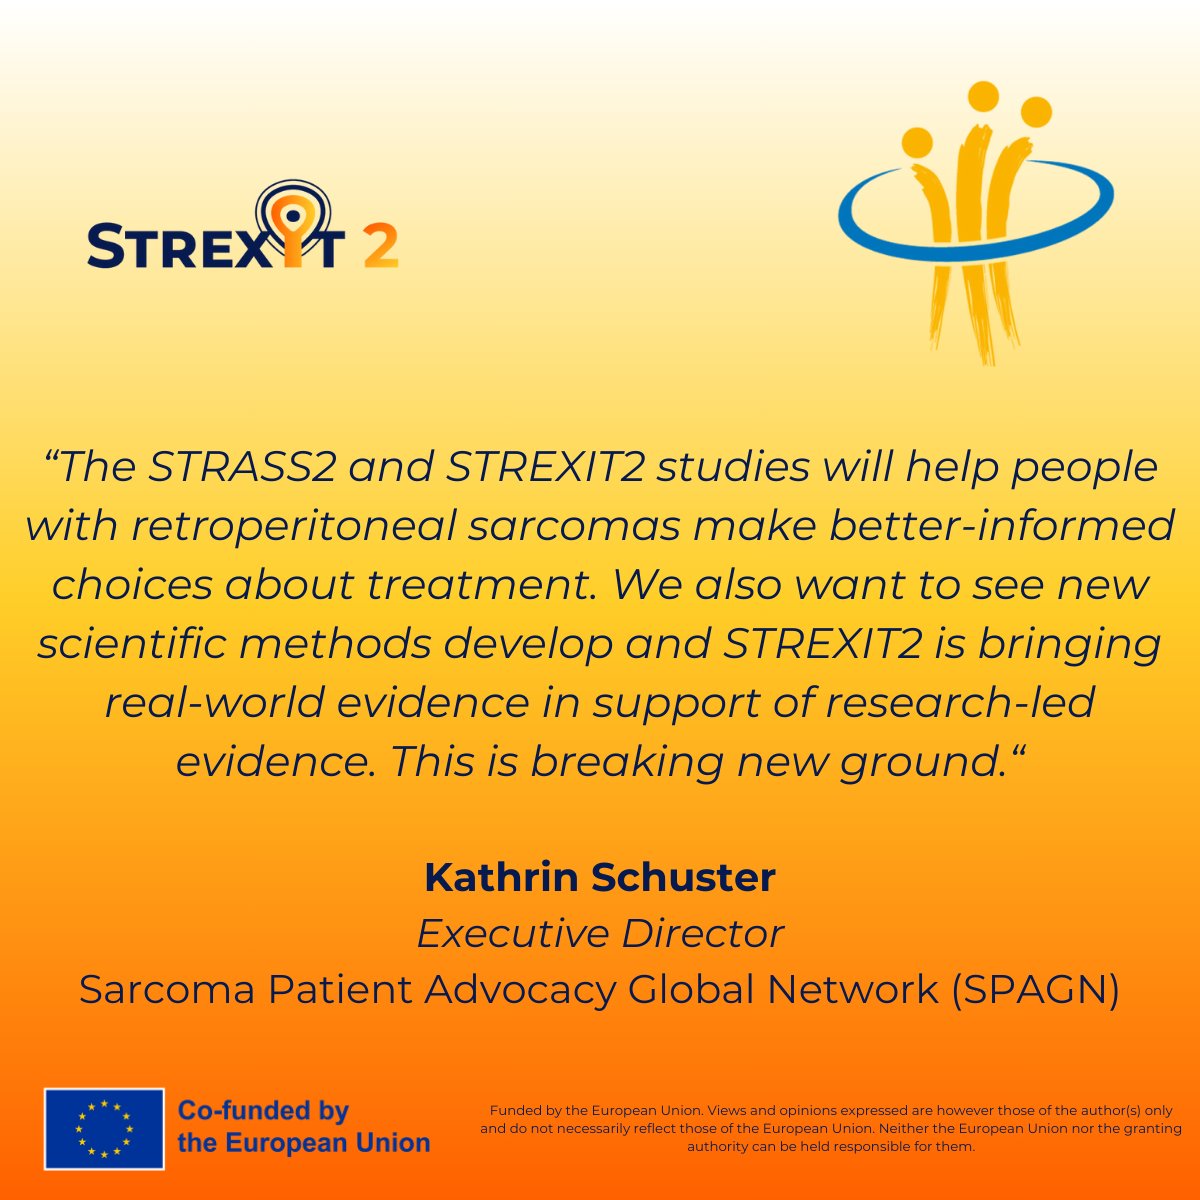 #STREXIT2_Horizon #HorizonEurope #EUCancerMission #SARCOMA #CancerResearch #ClinicalTrials #Cancer #RetroperitonealSarcoma #SoftTissueSarcoma @EU_Commission